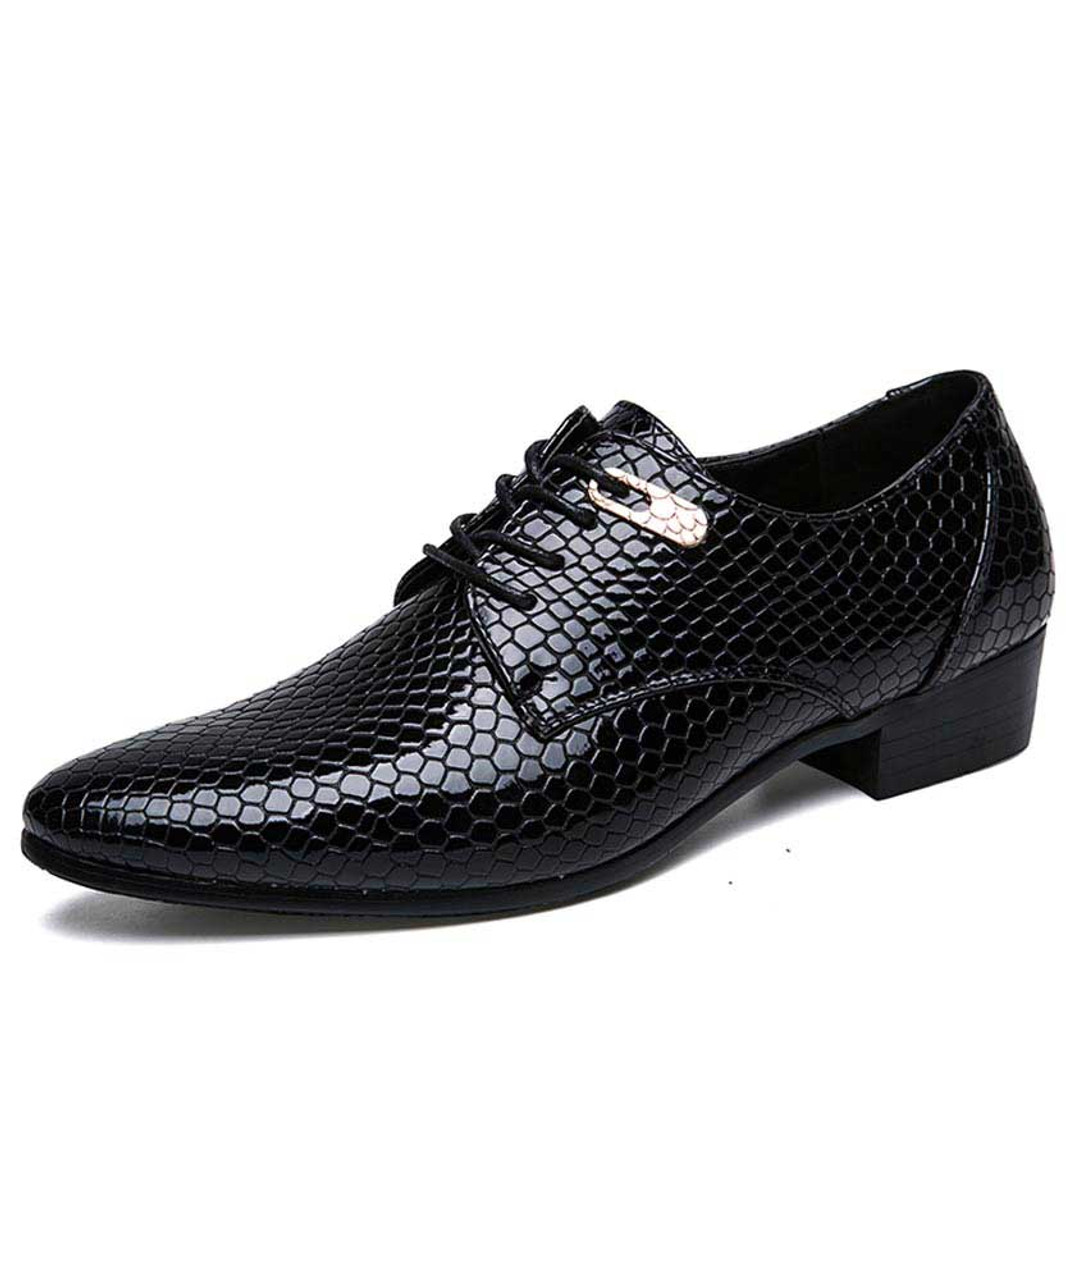 Black snake skin pattern derby dress shoe | Mens dress shoes online